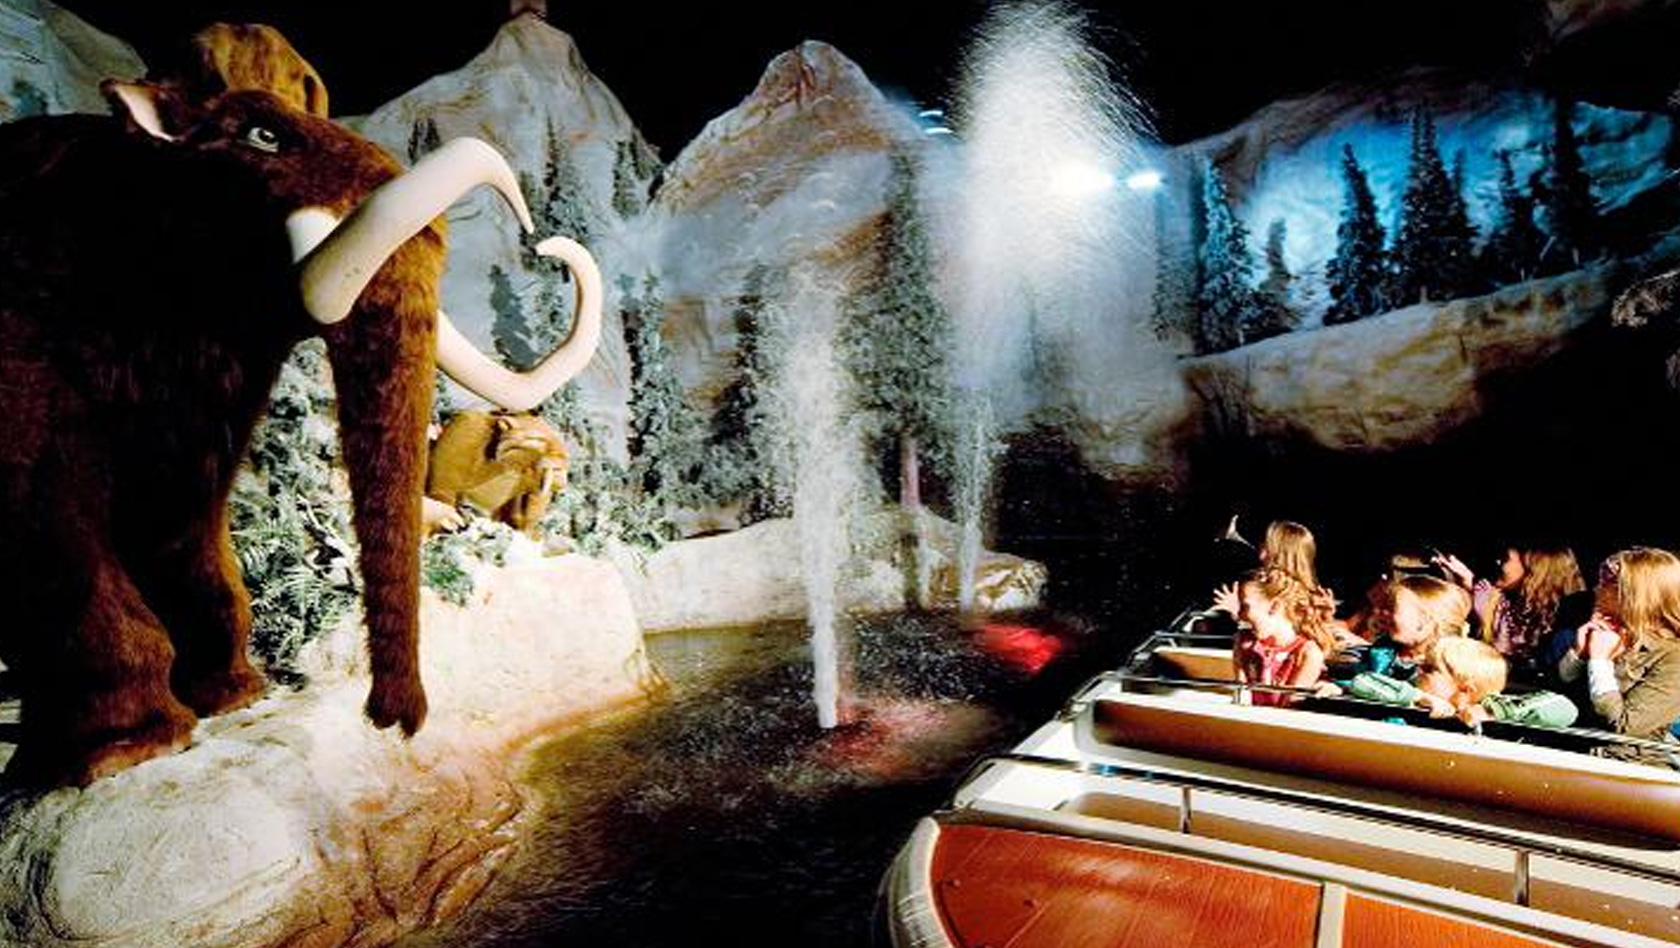 Ice Age Adventure - Movie Park Germany - Innen